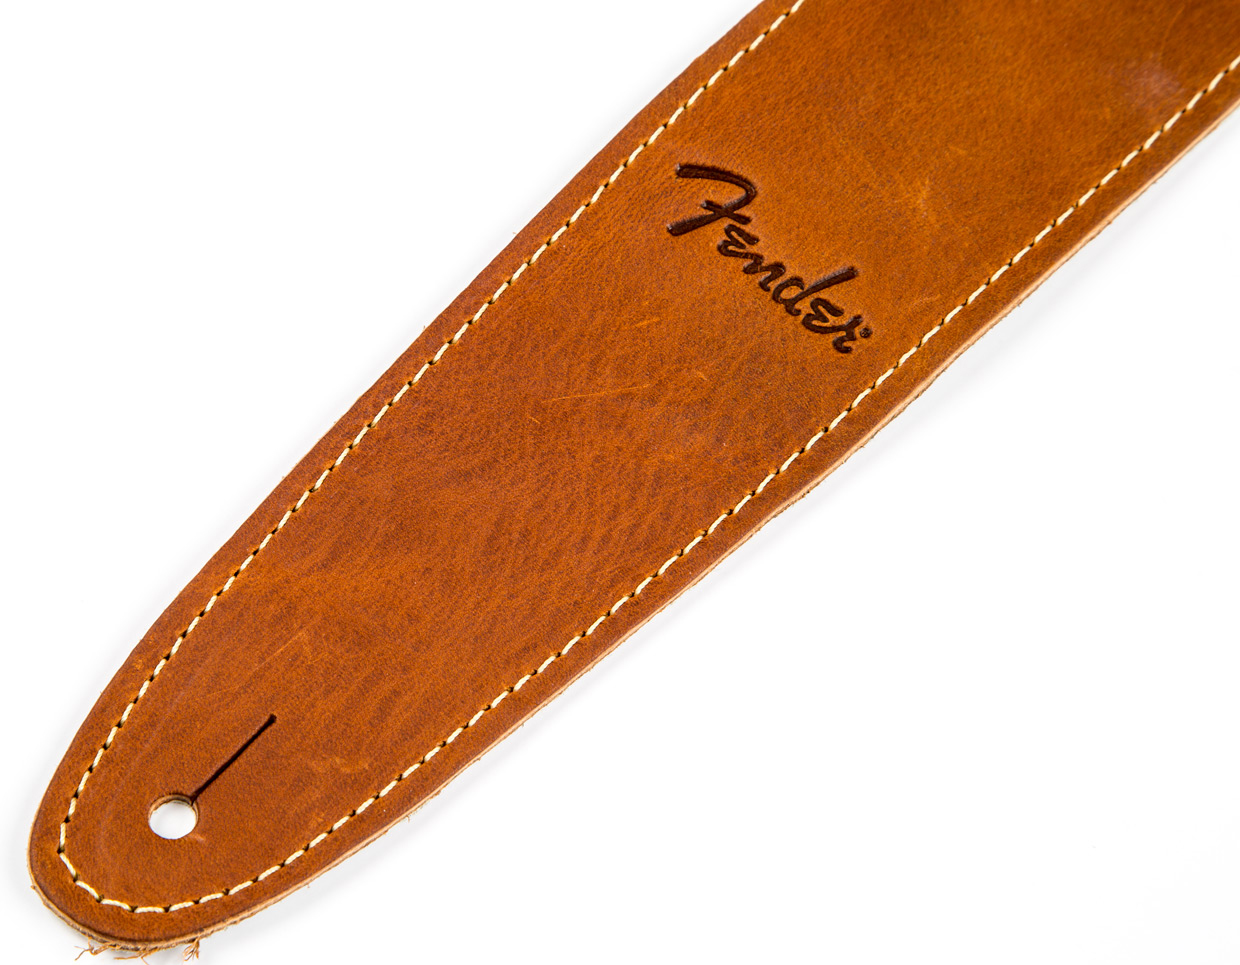 Fender Straps Leather Ball Glove - Brown - Guitar strap - Variation 1